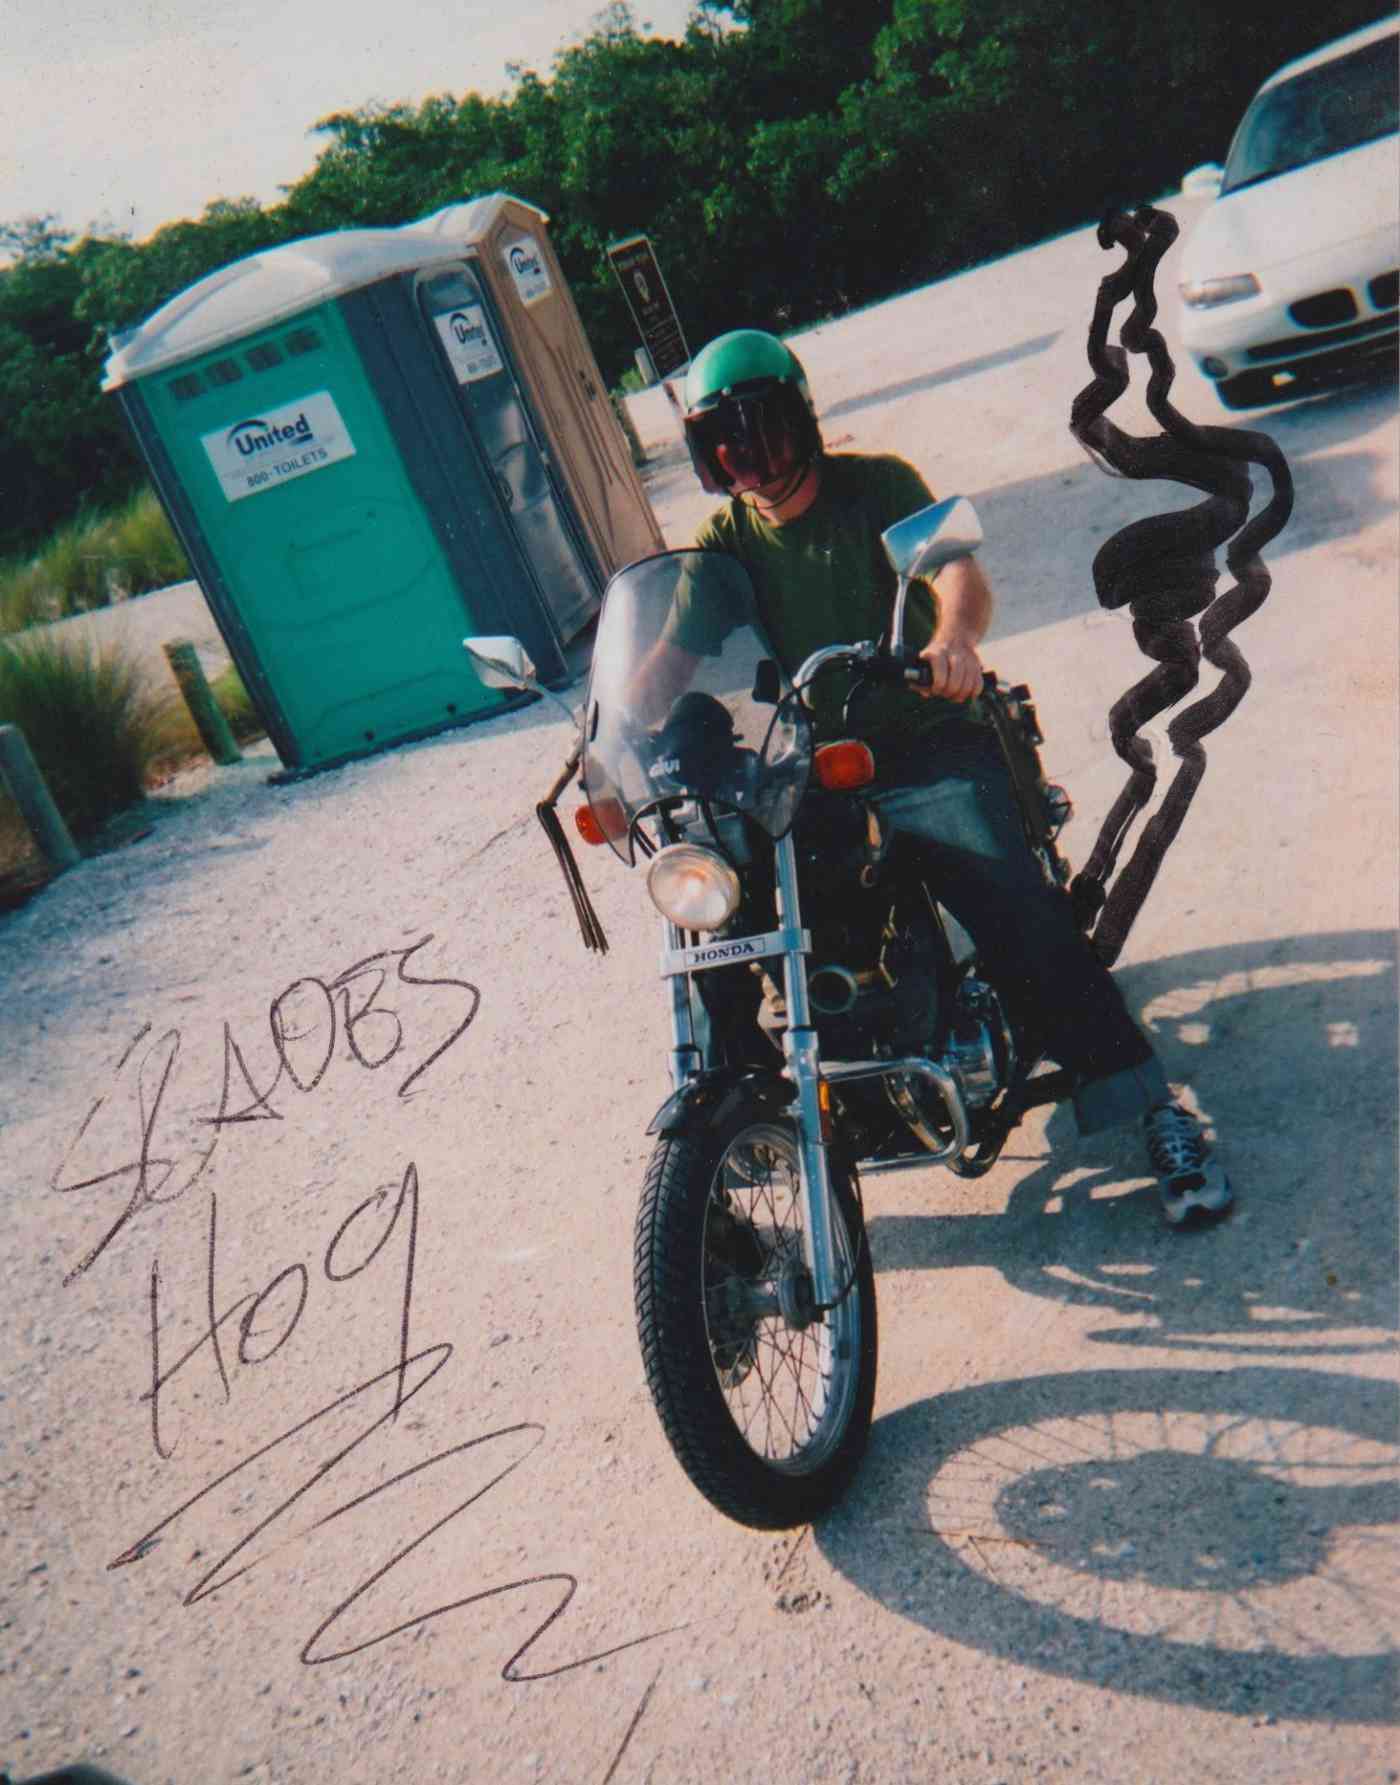 Slade's Hog: Slade Nash on a motorcycle